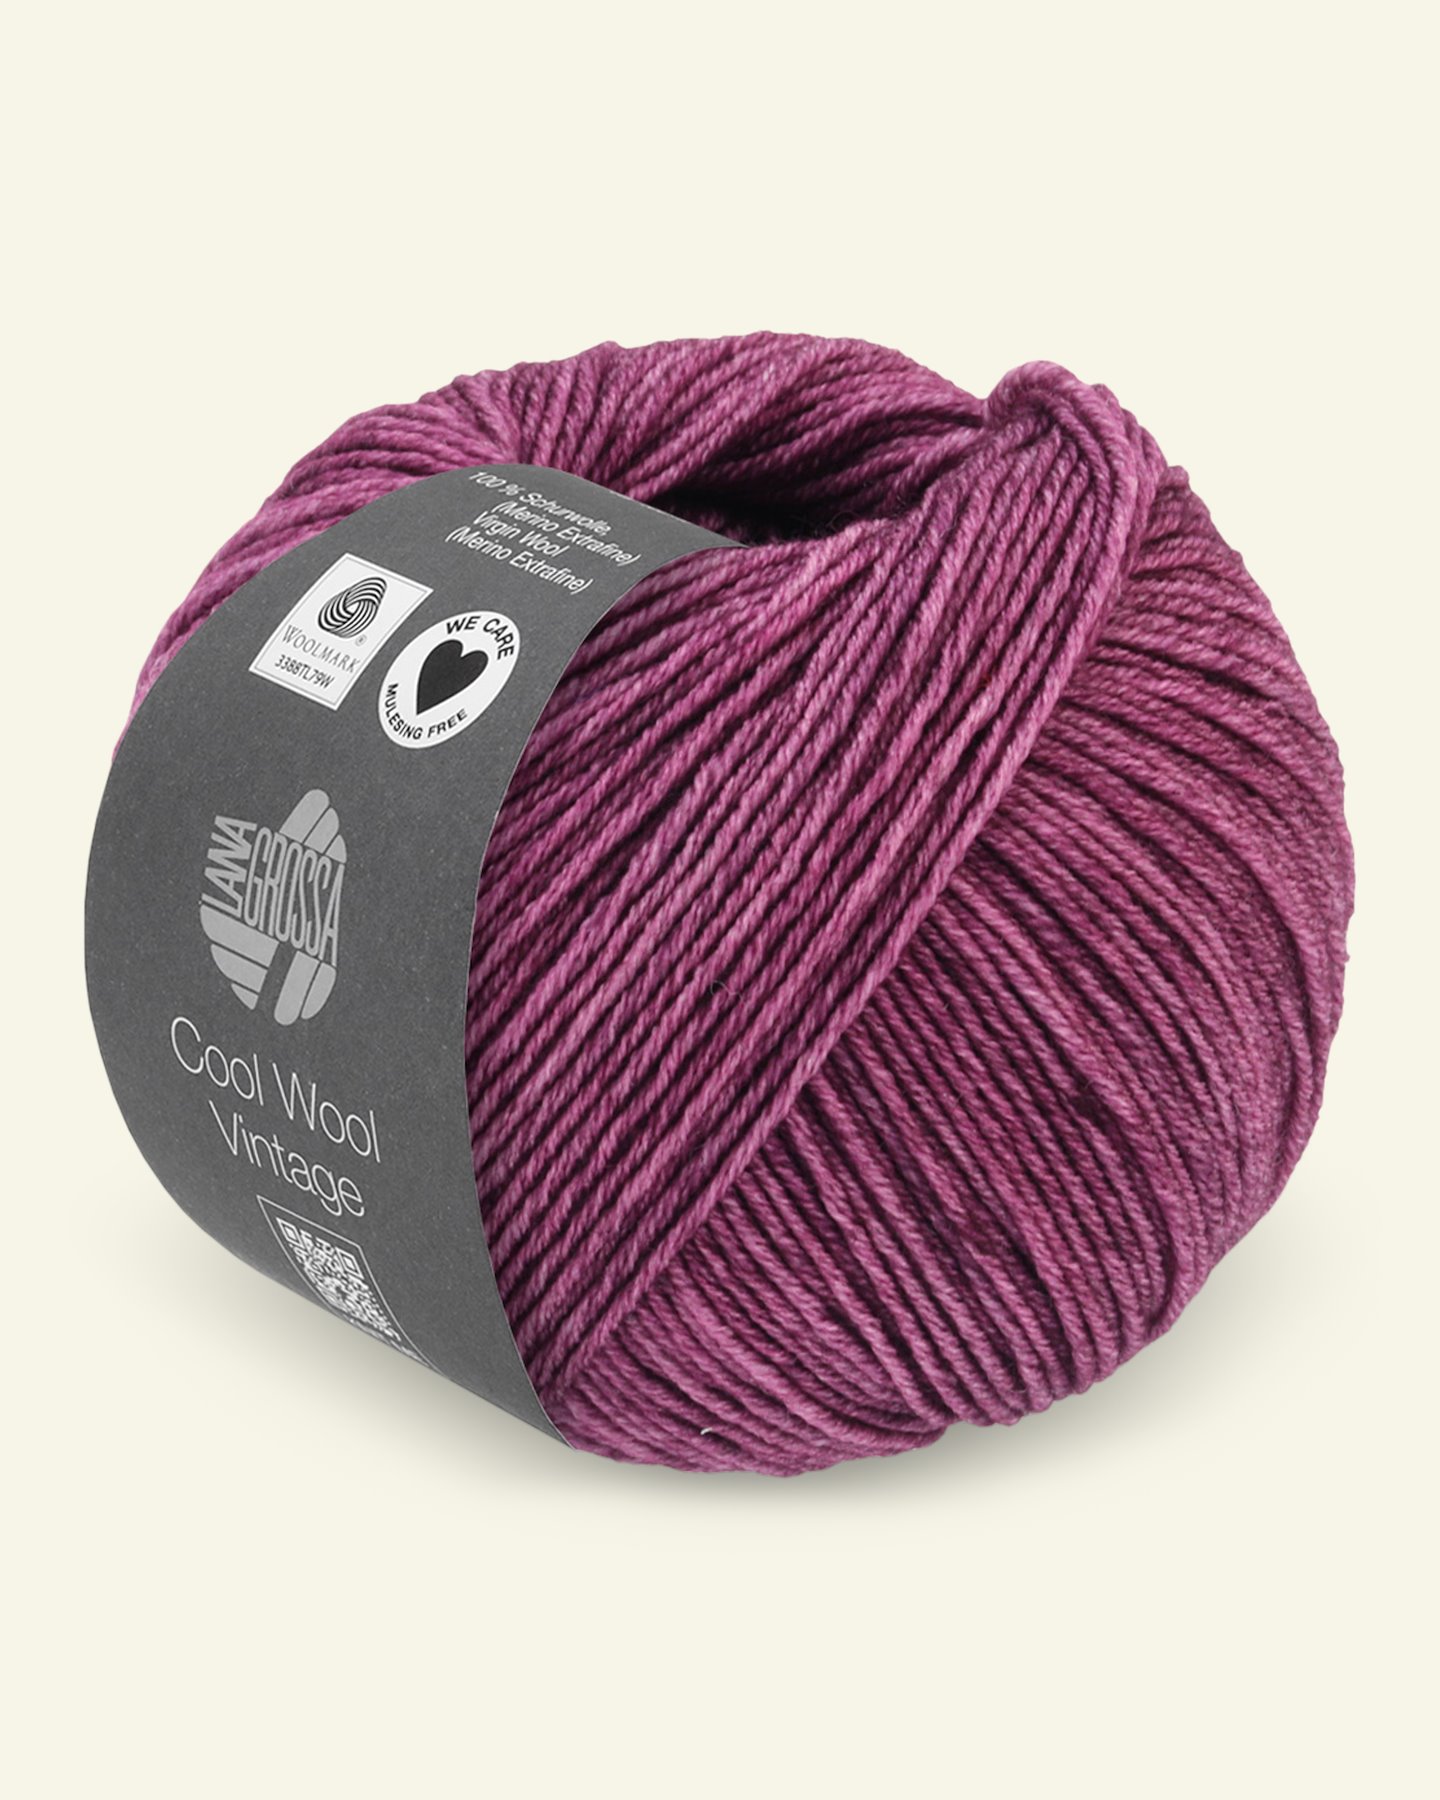 Lana Grossa, extrafine merino wool yarn "Cool Wool Vintage", plum 90001079_pack